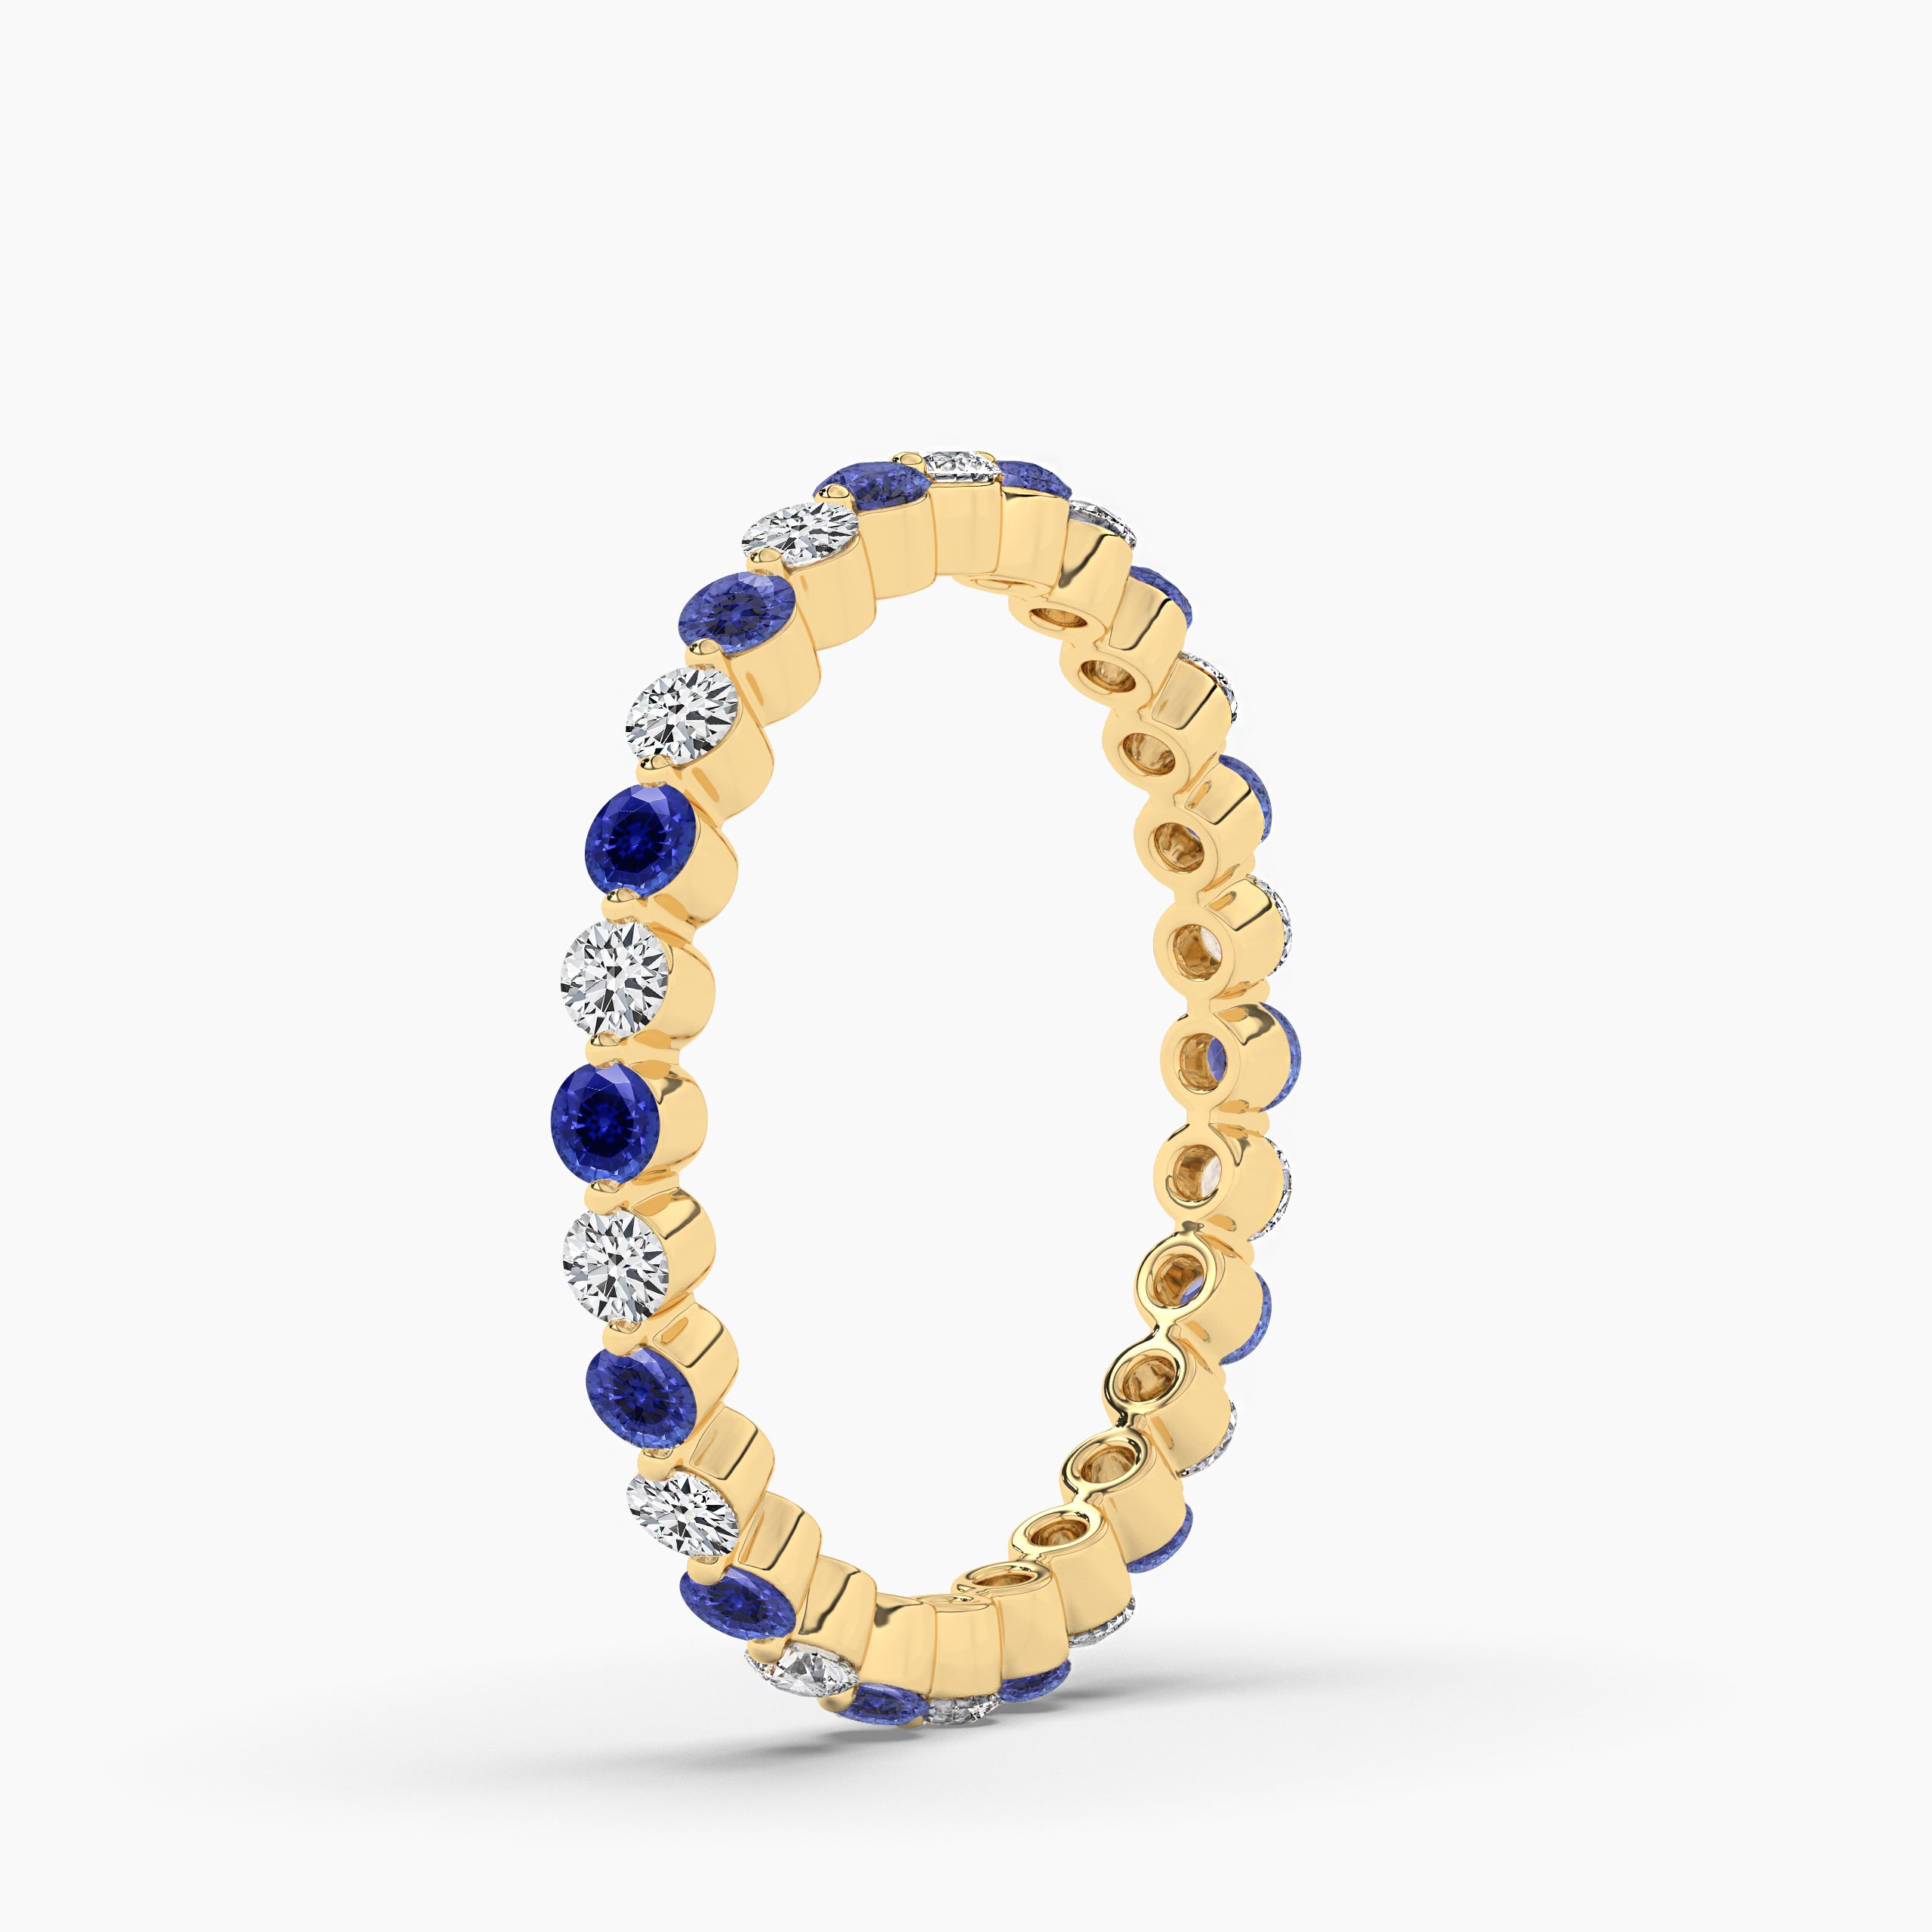 Blue sapphire and white diamond wedding ring